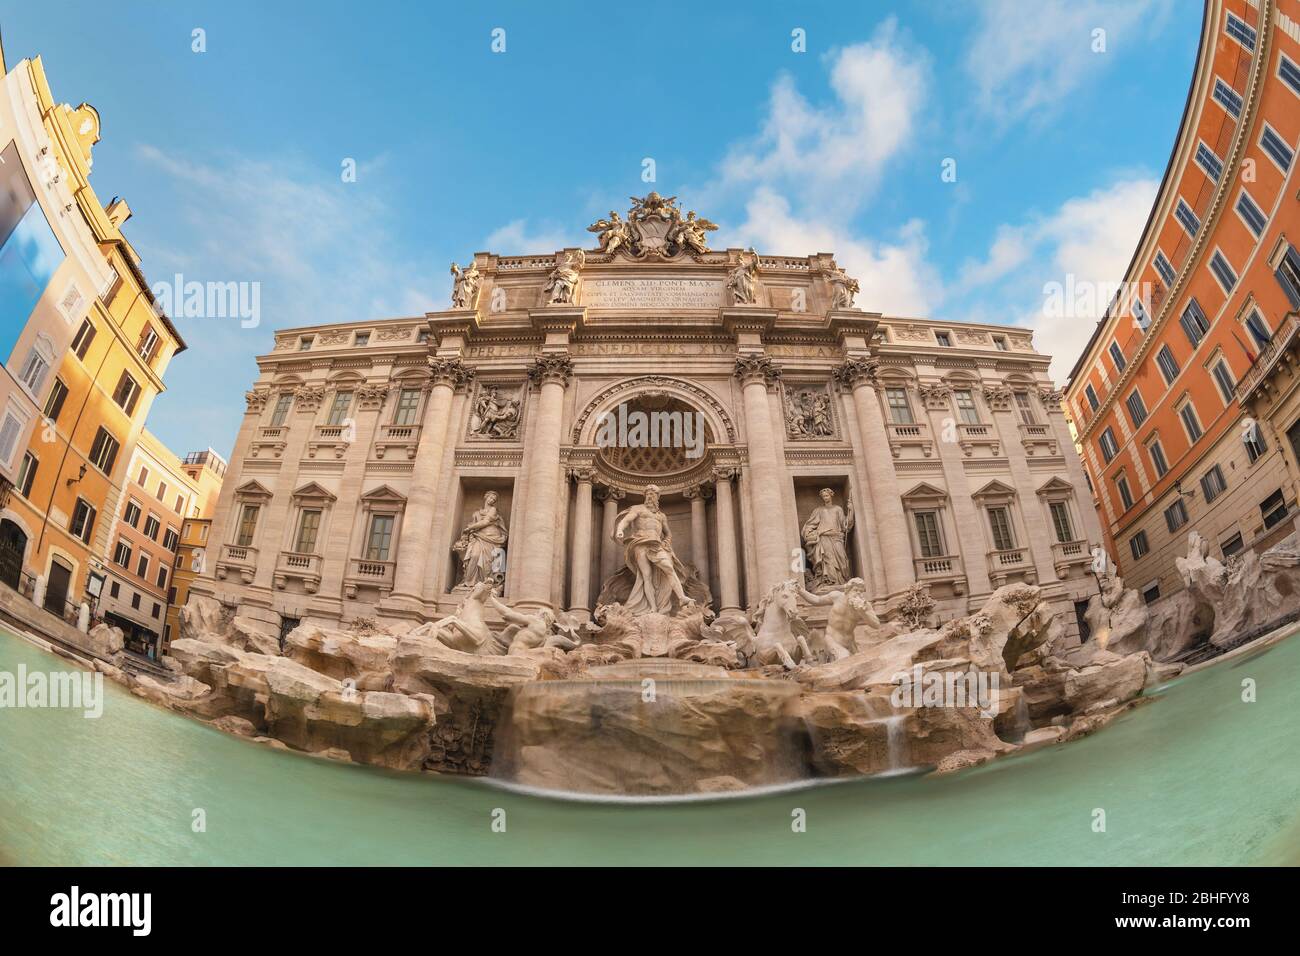 Rom Italien, die Skyline der Stadt am Trevi-Brunnen leer niemand Stockfoto